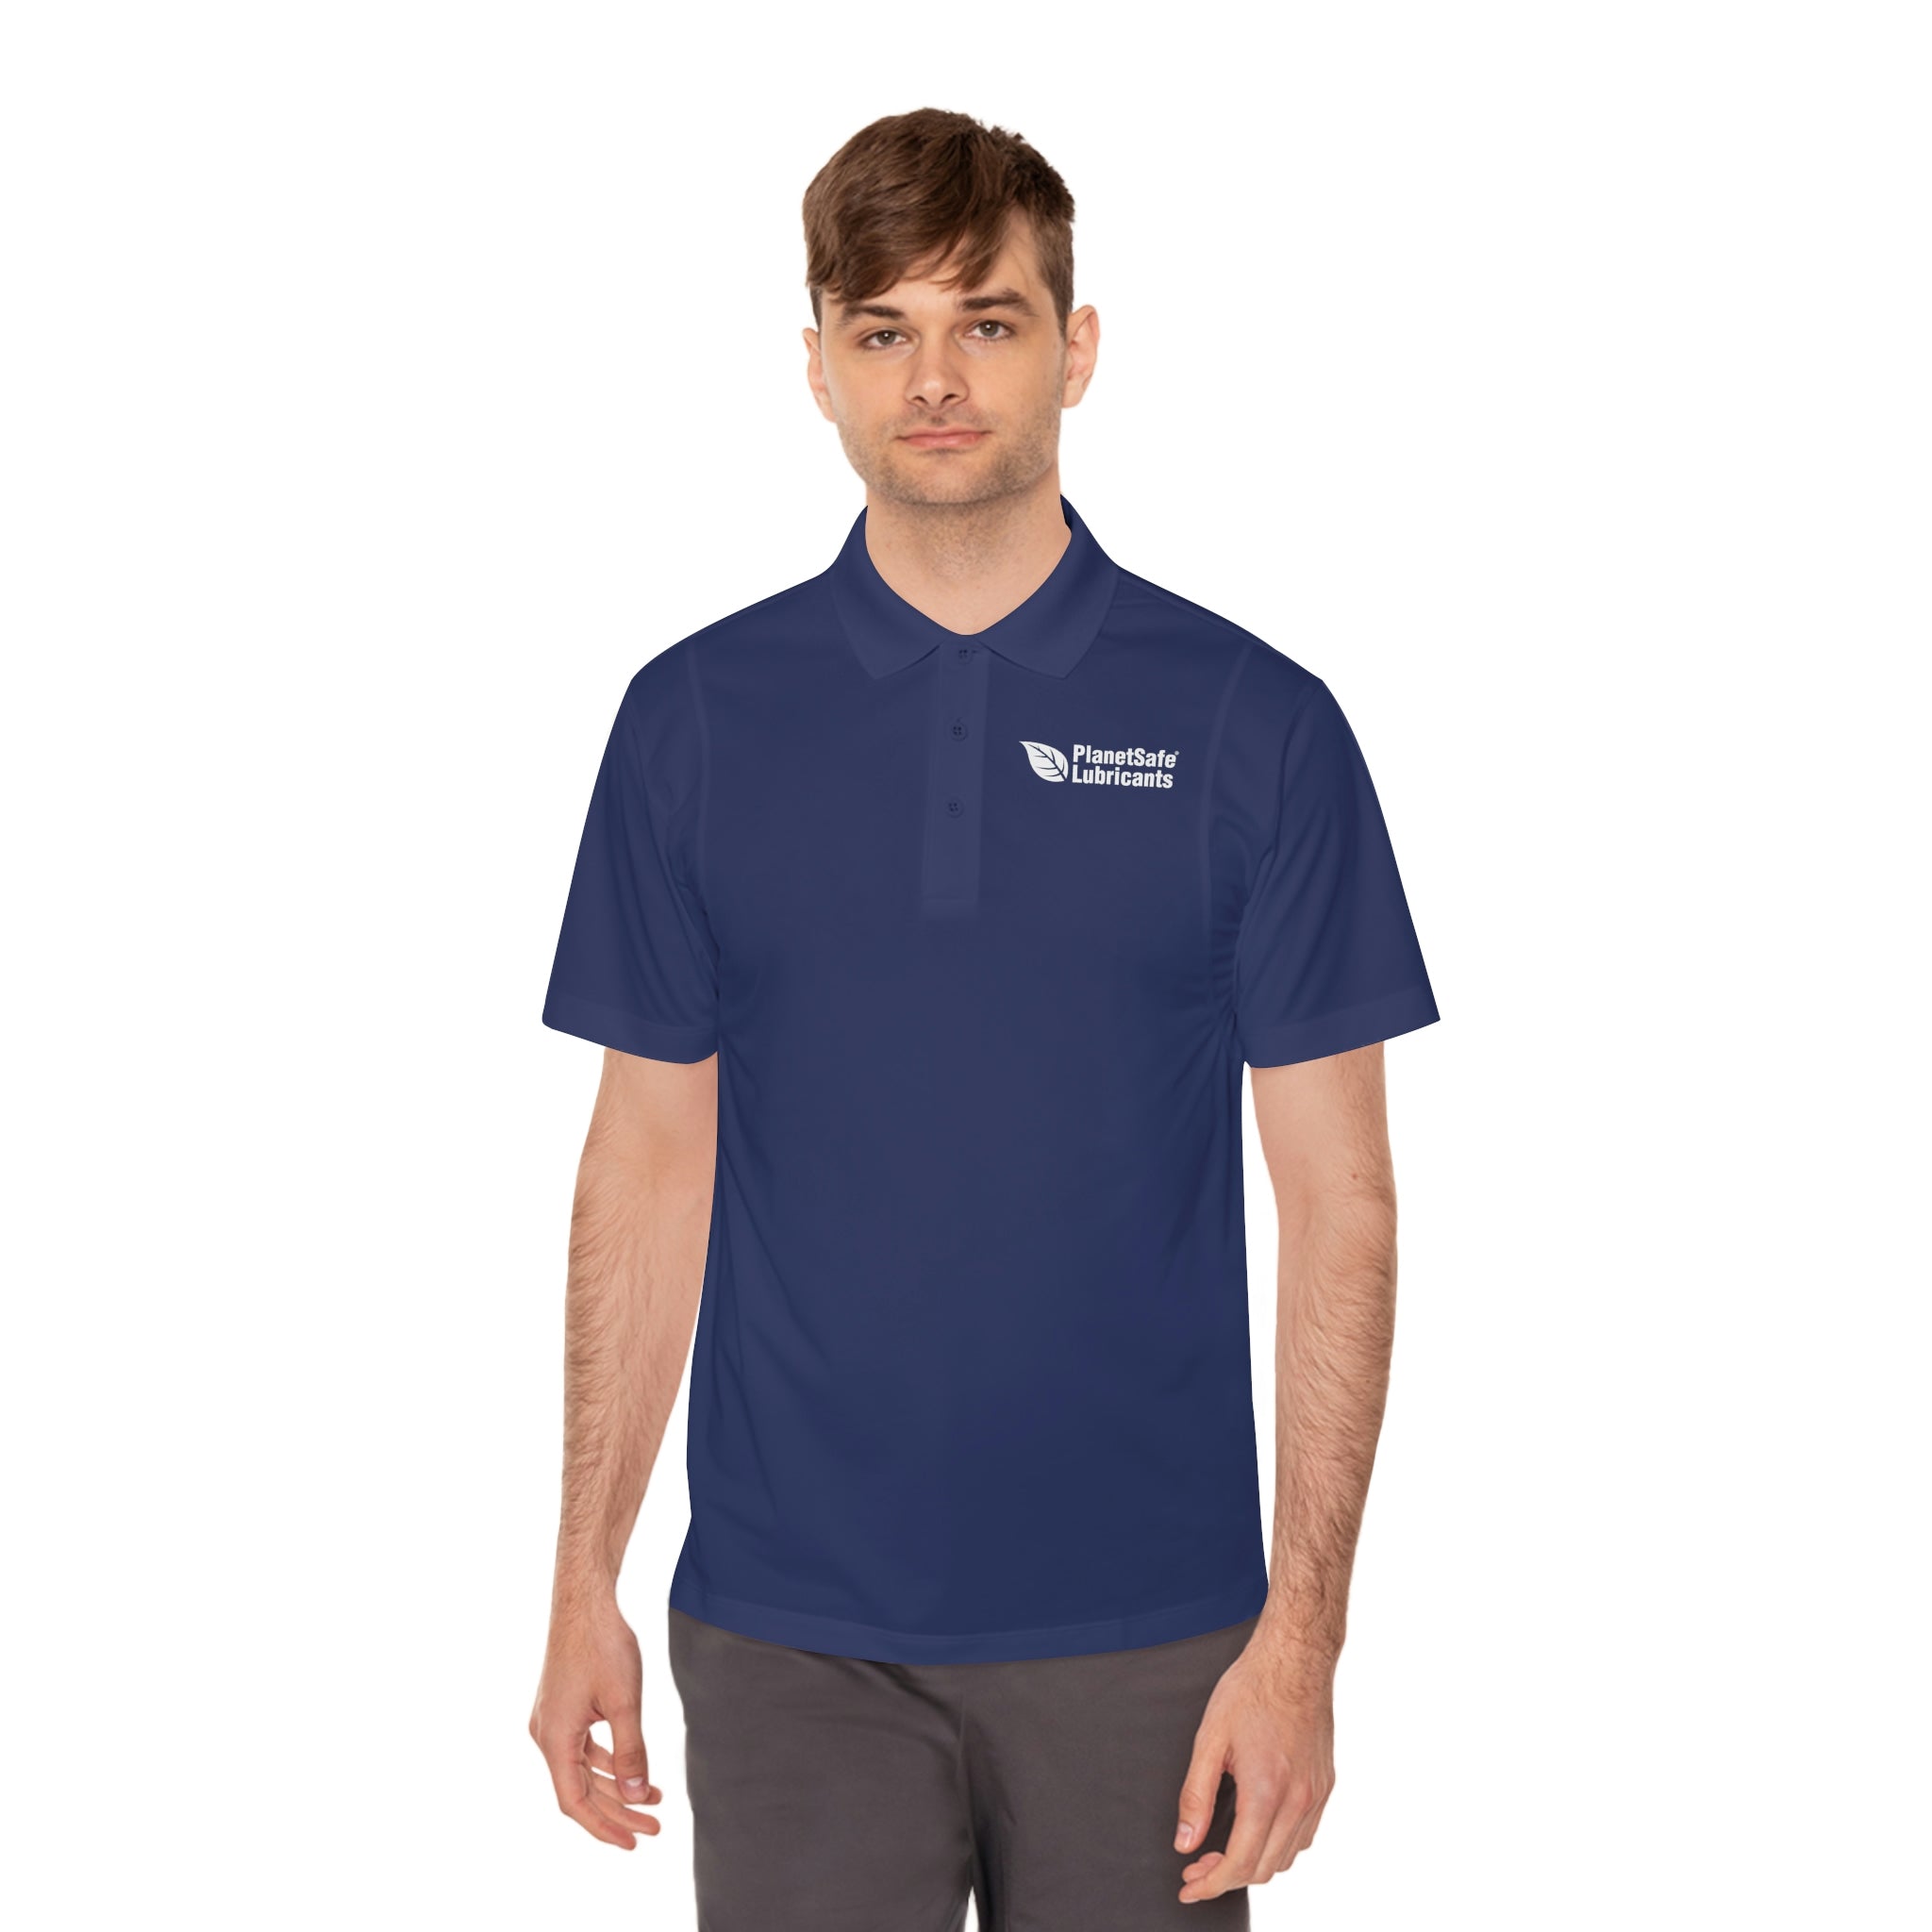 PlanetSafe Lubricants | Men's Sport Polo Shirt | Brand Logo | Blue